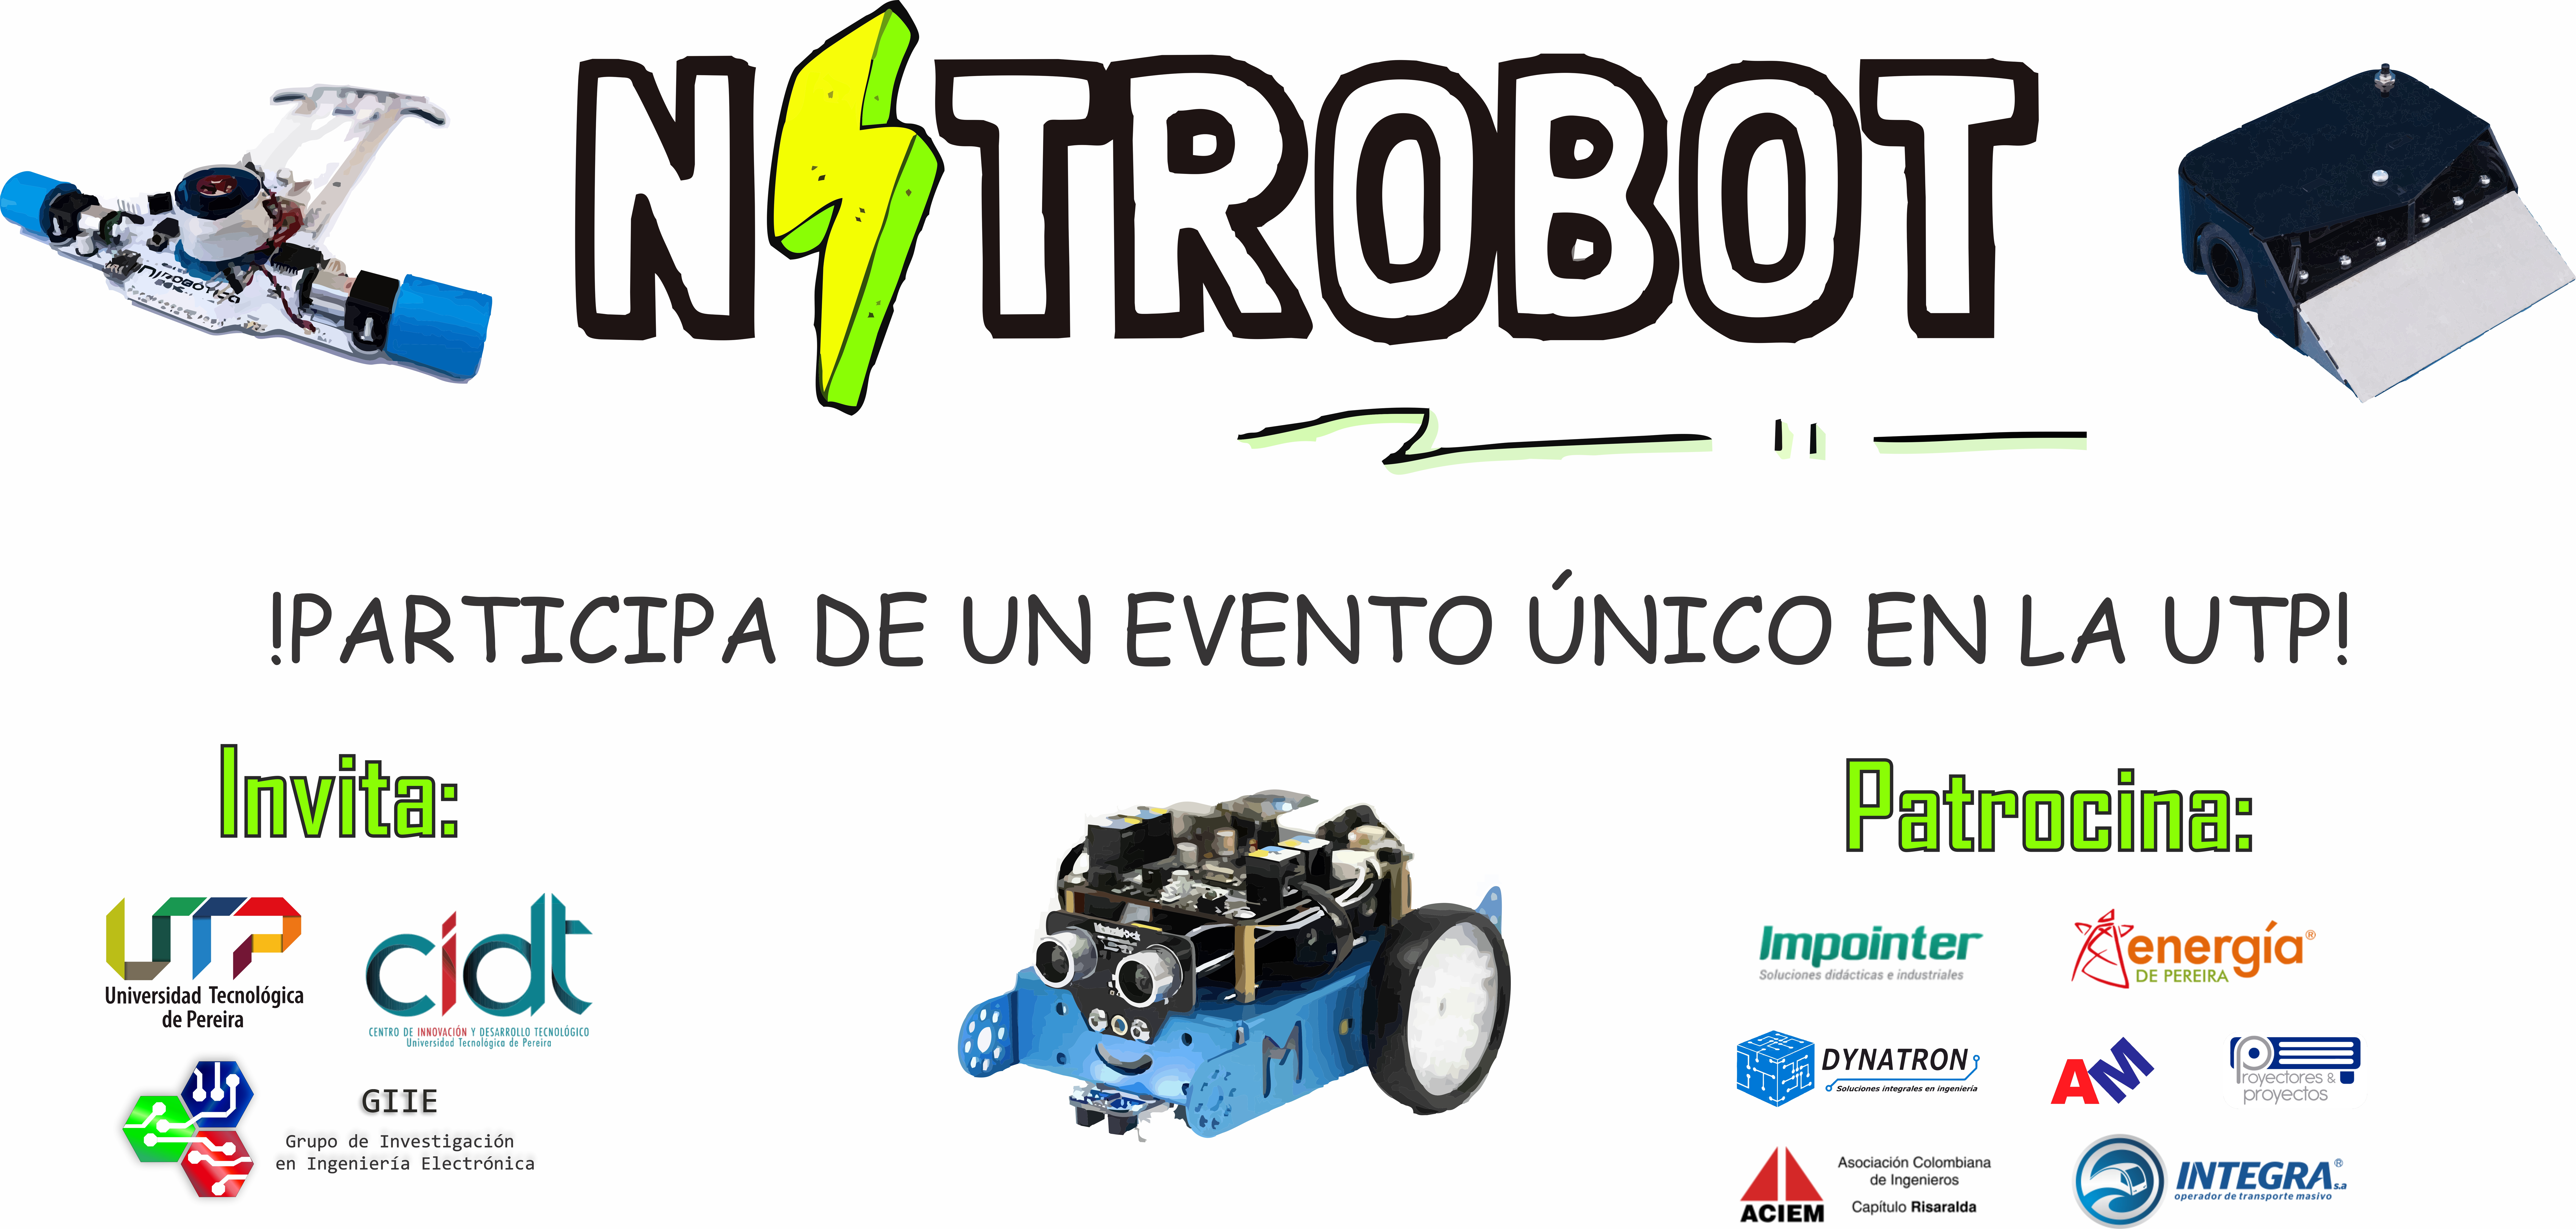 NitroBot 2019